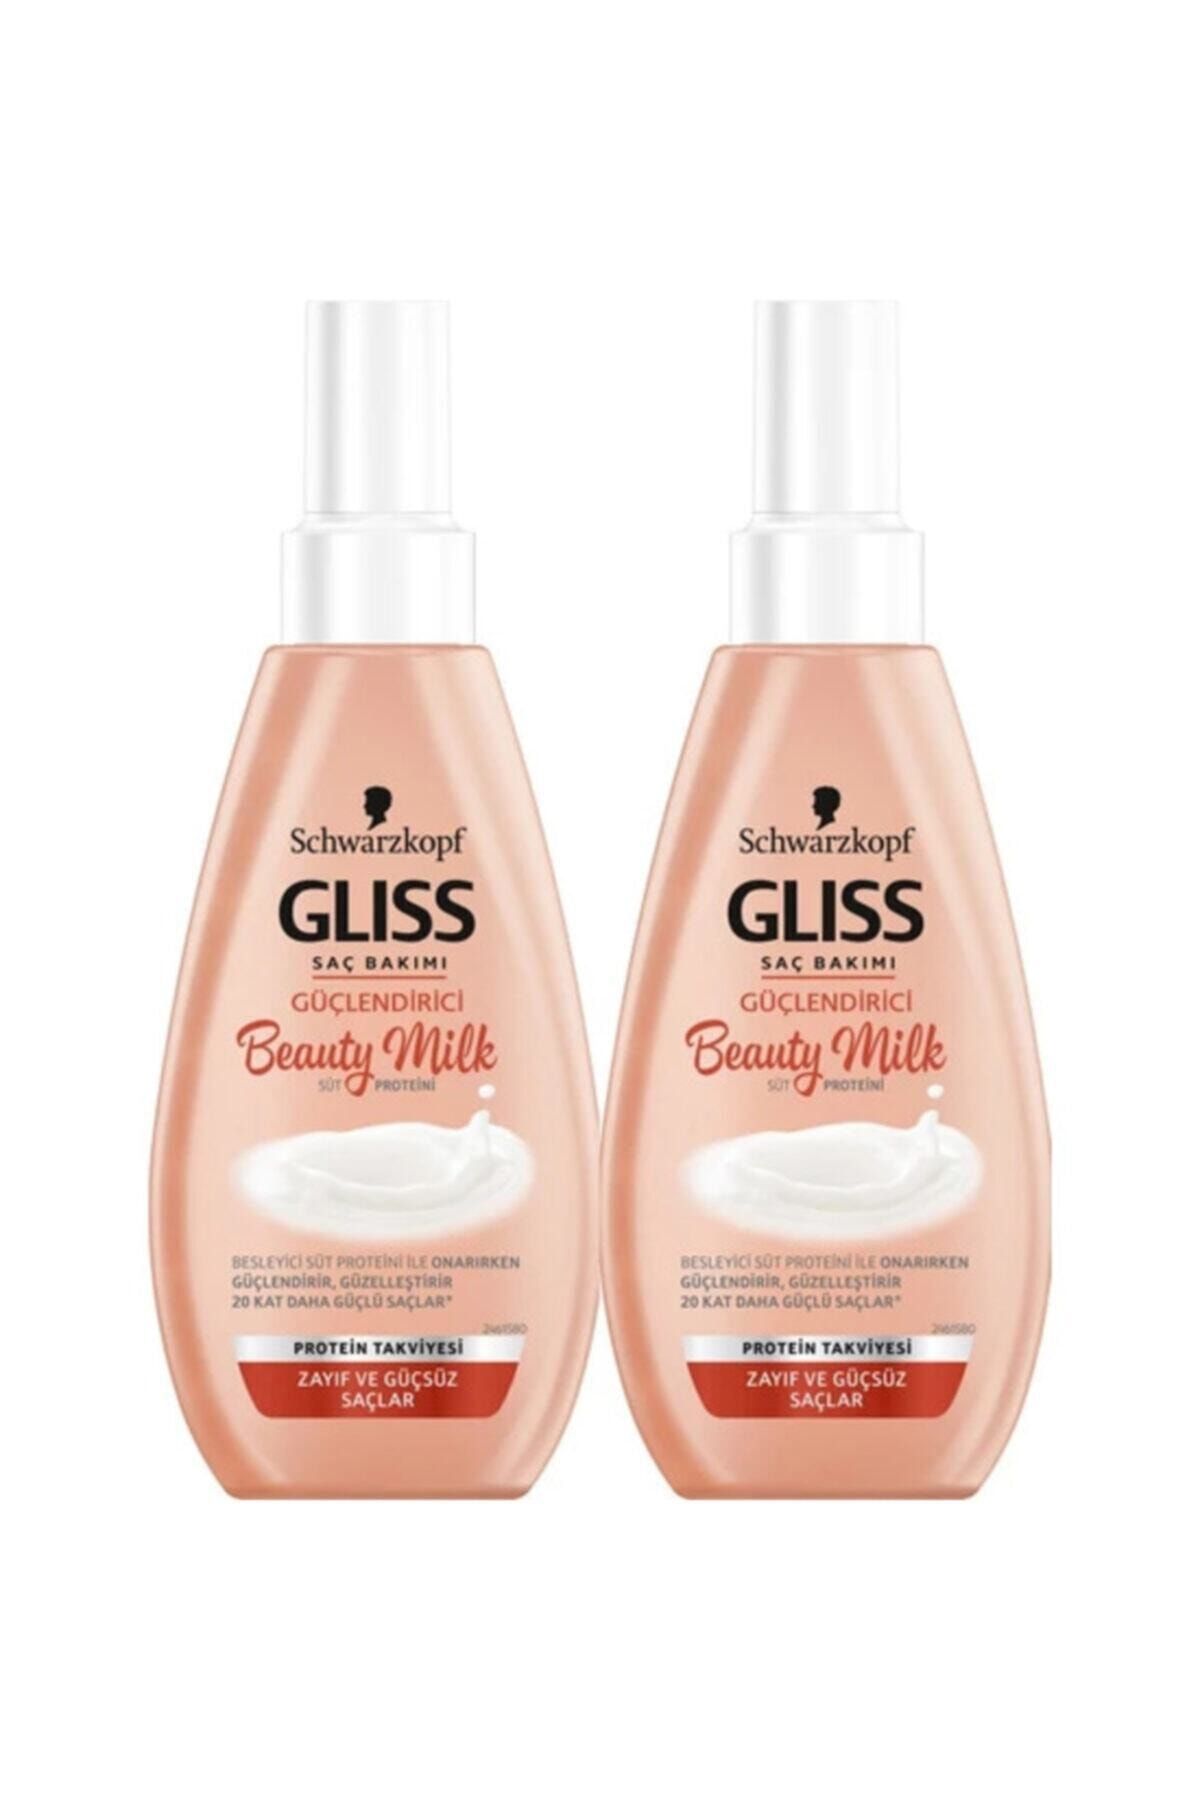 Gliss Beauty Milk-güçlendirici 150 Ml X 2 Adet